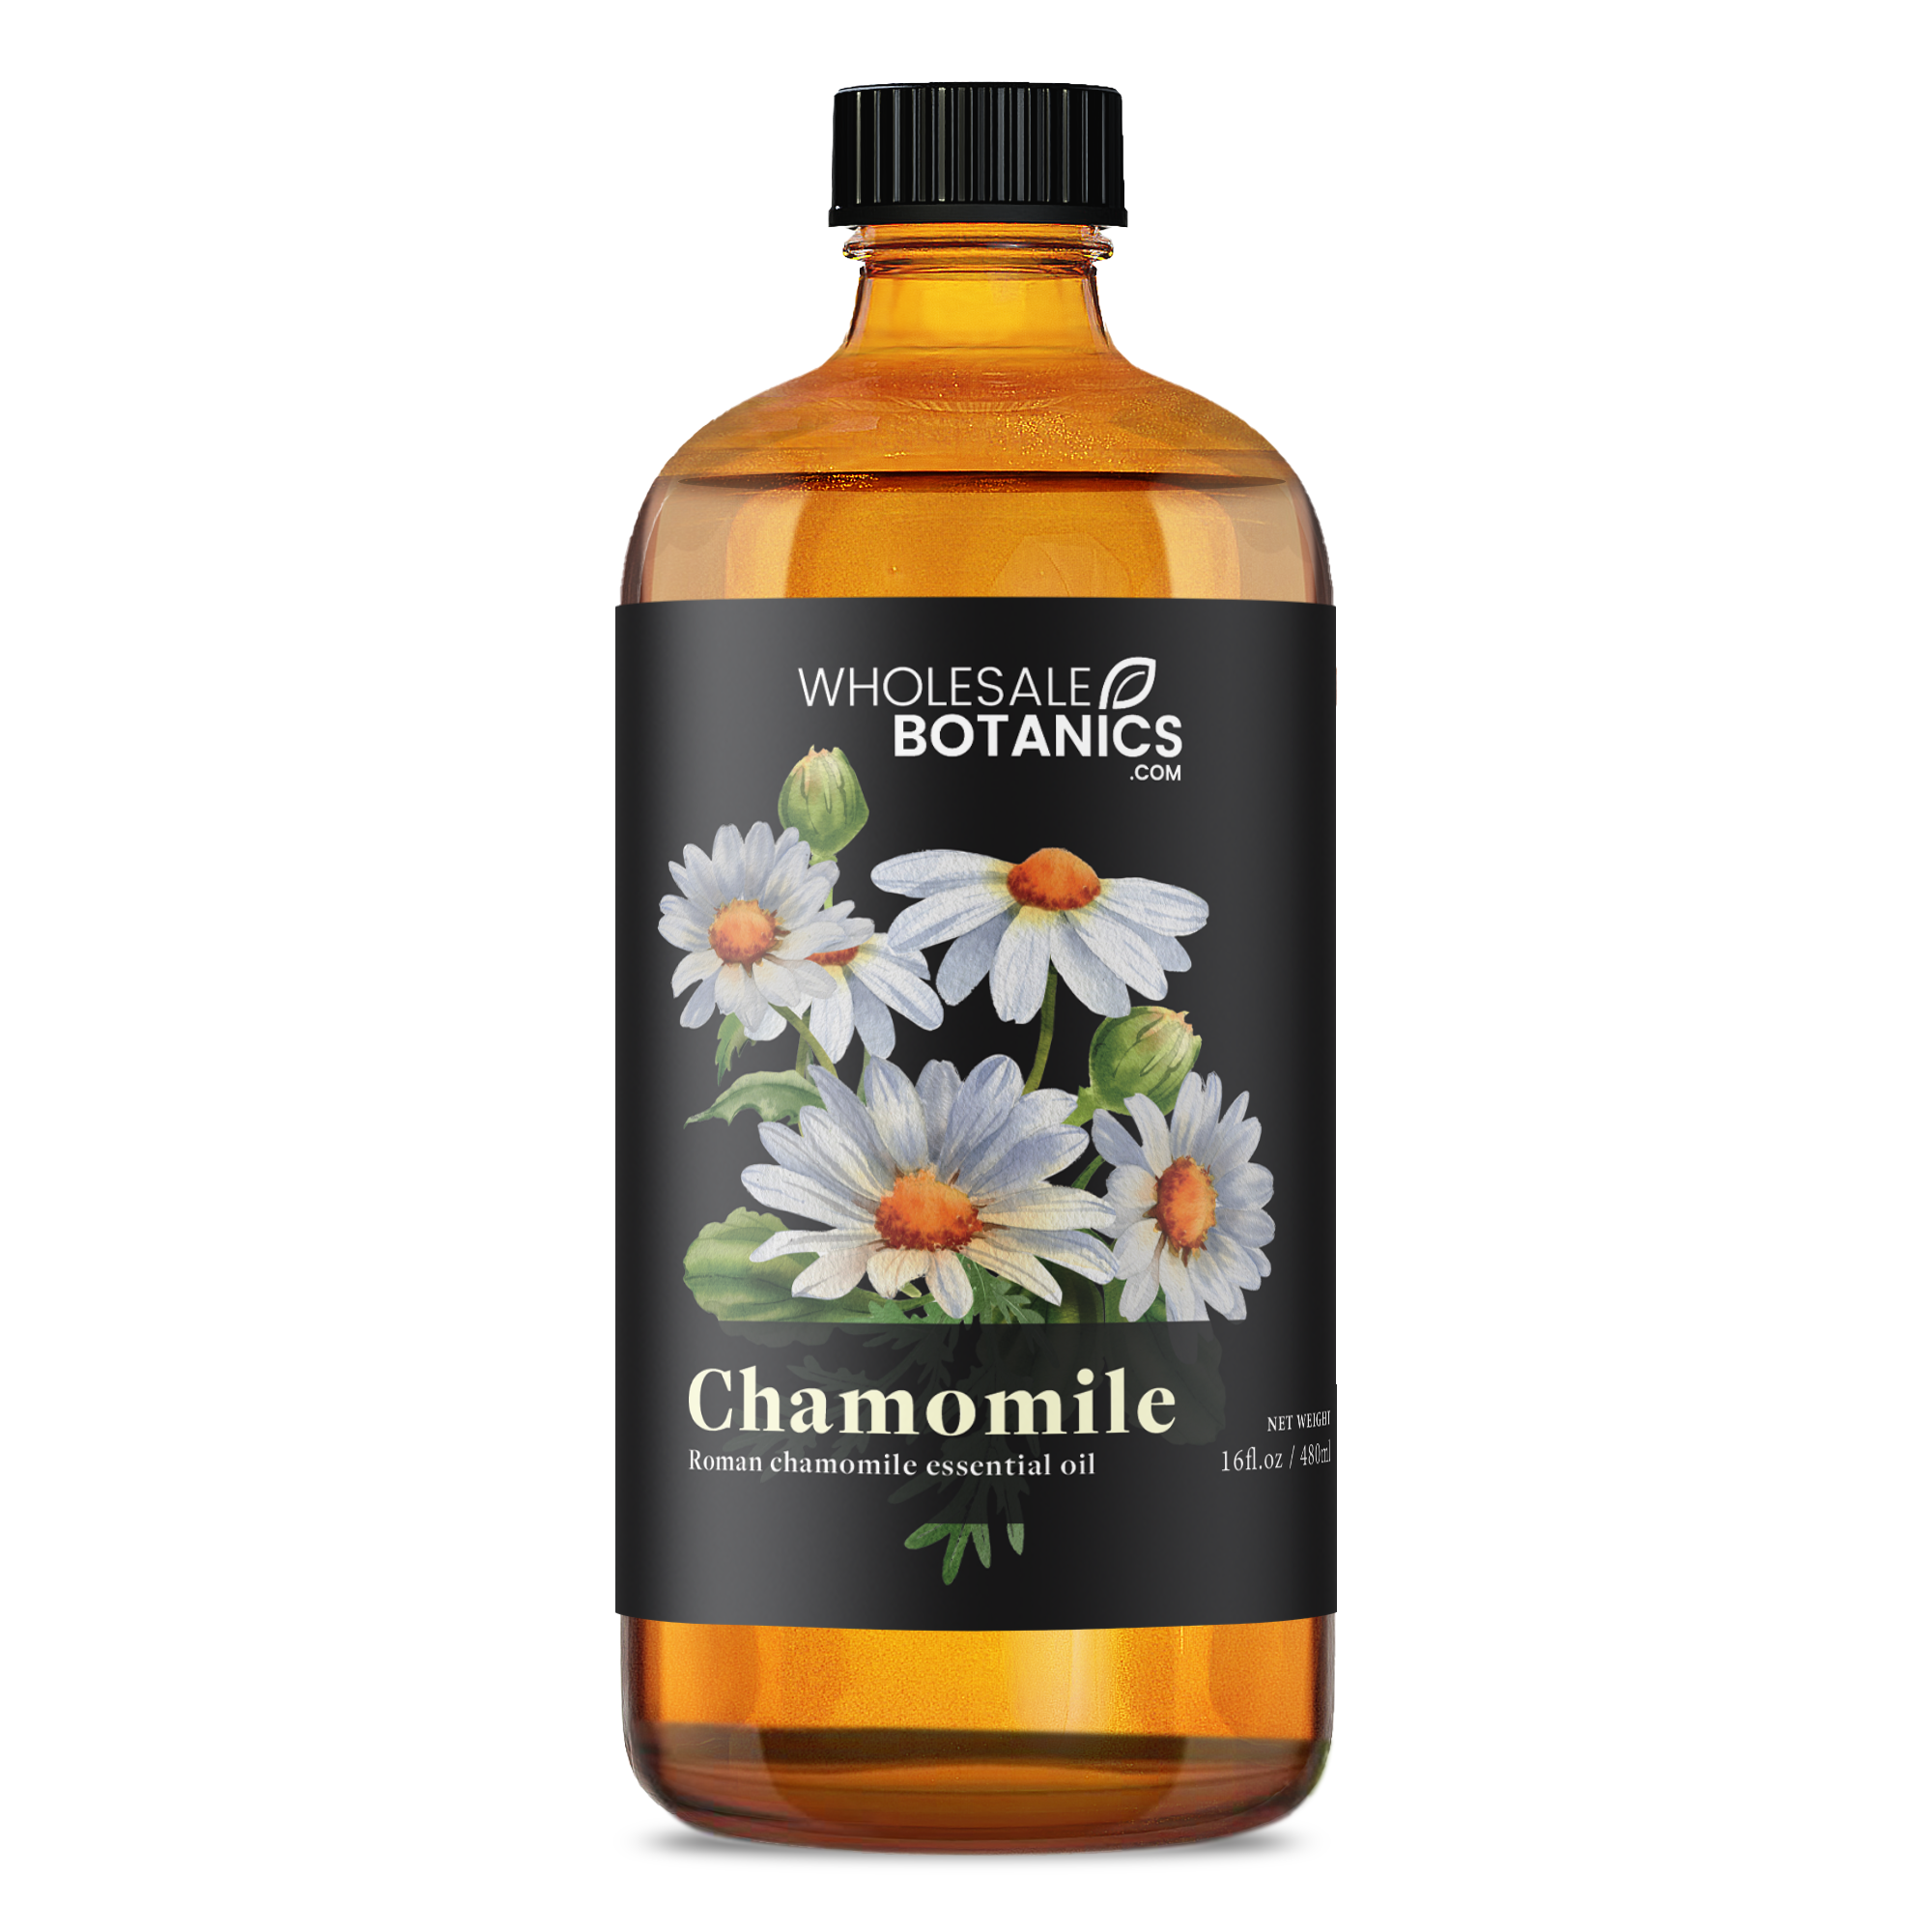 6 Benefits of Roman Chamomile Essential Oil